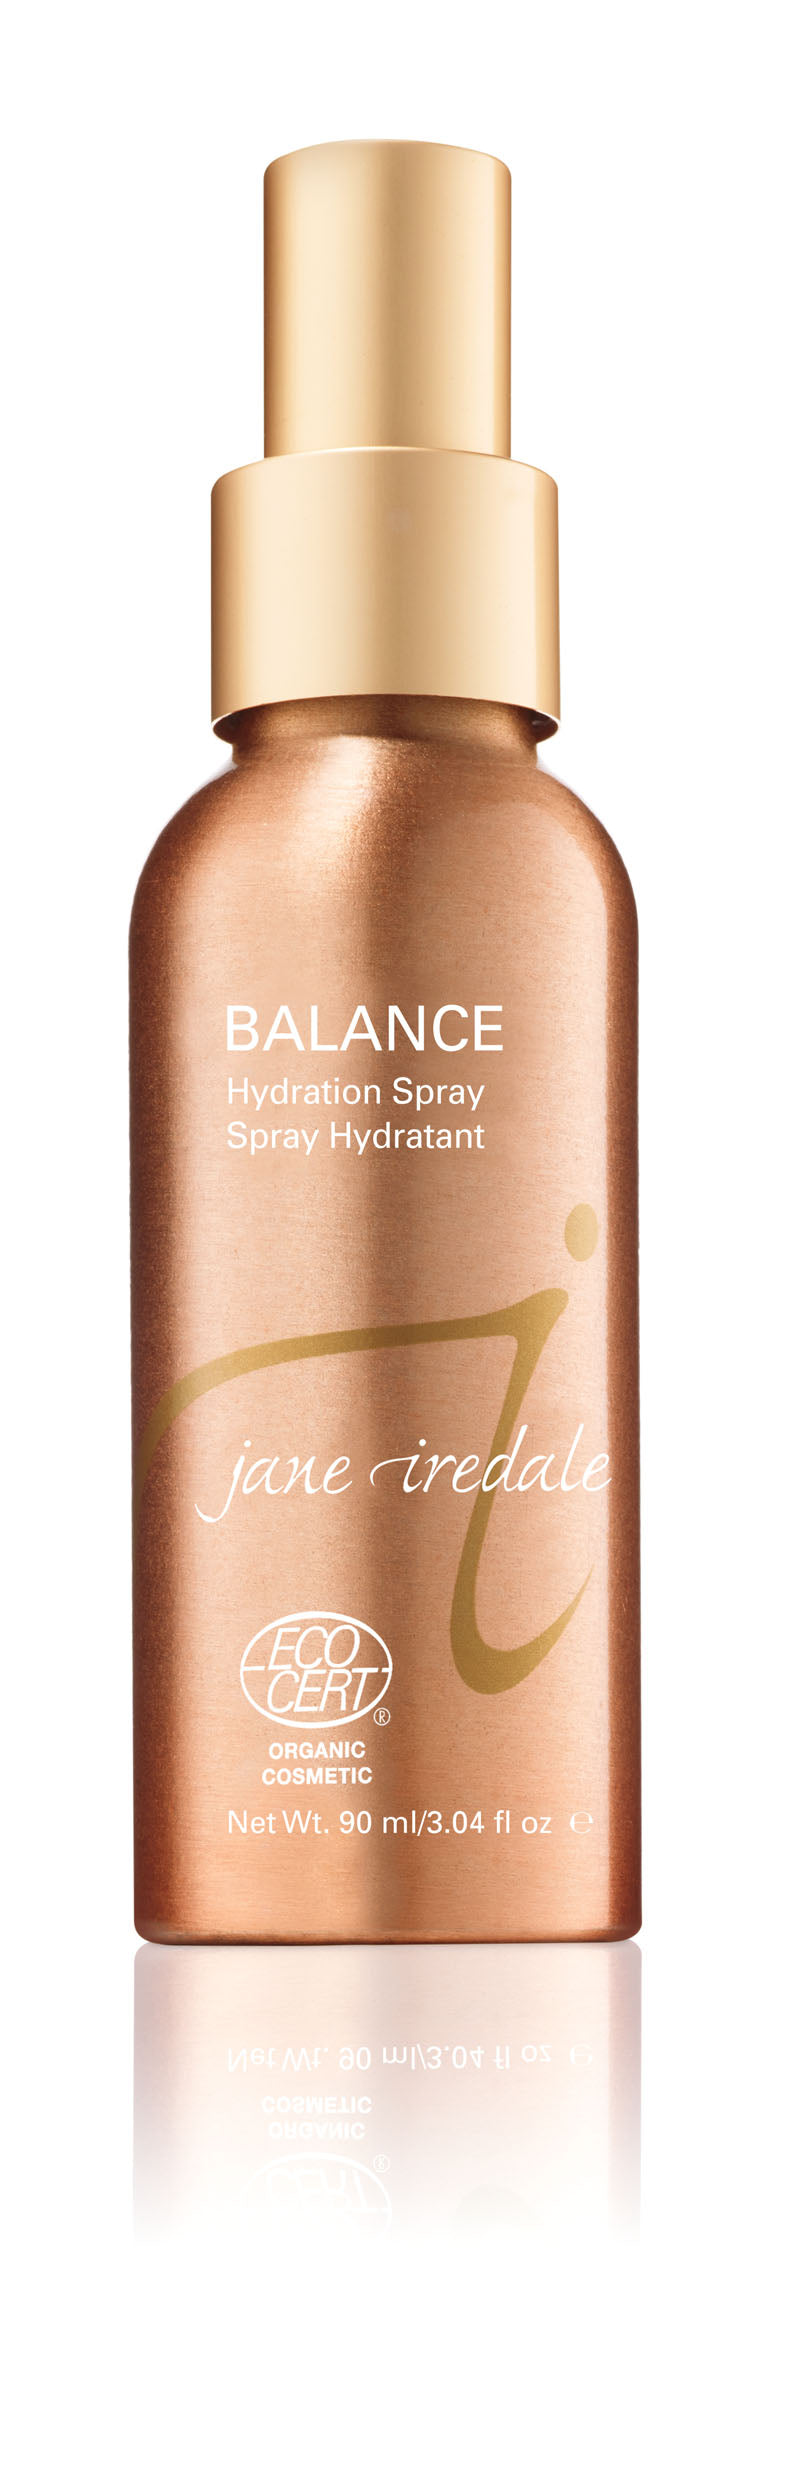 HydrationSpray Balance